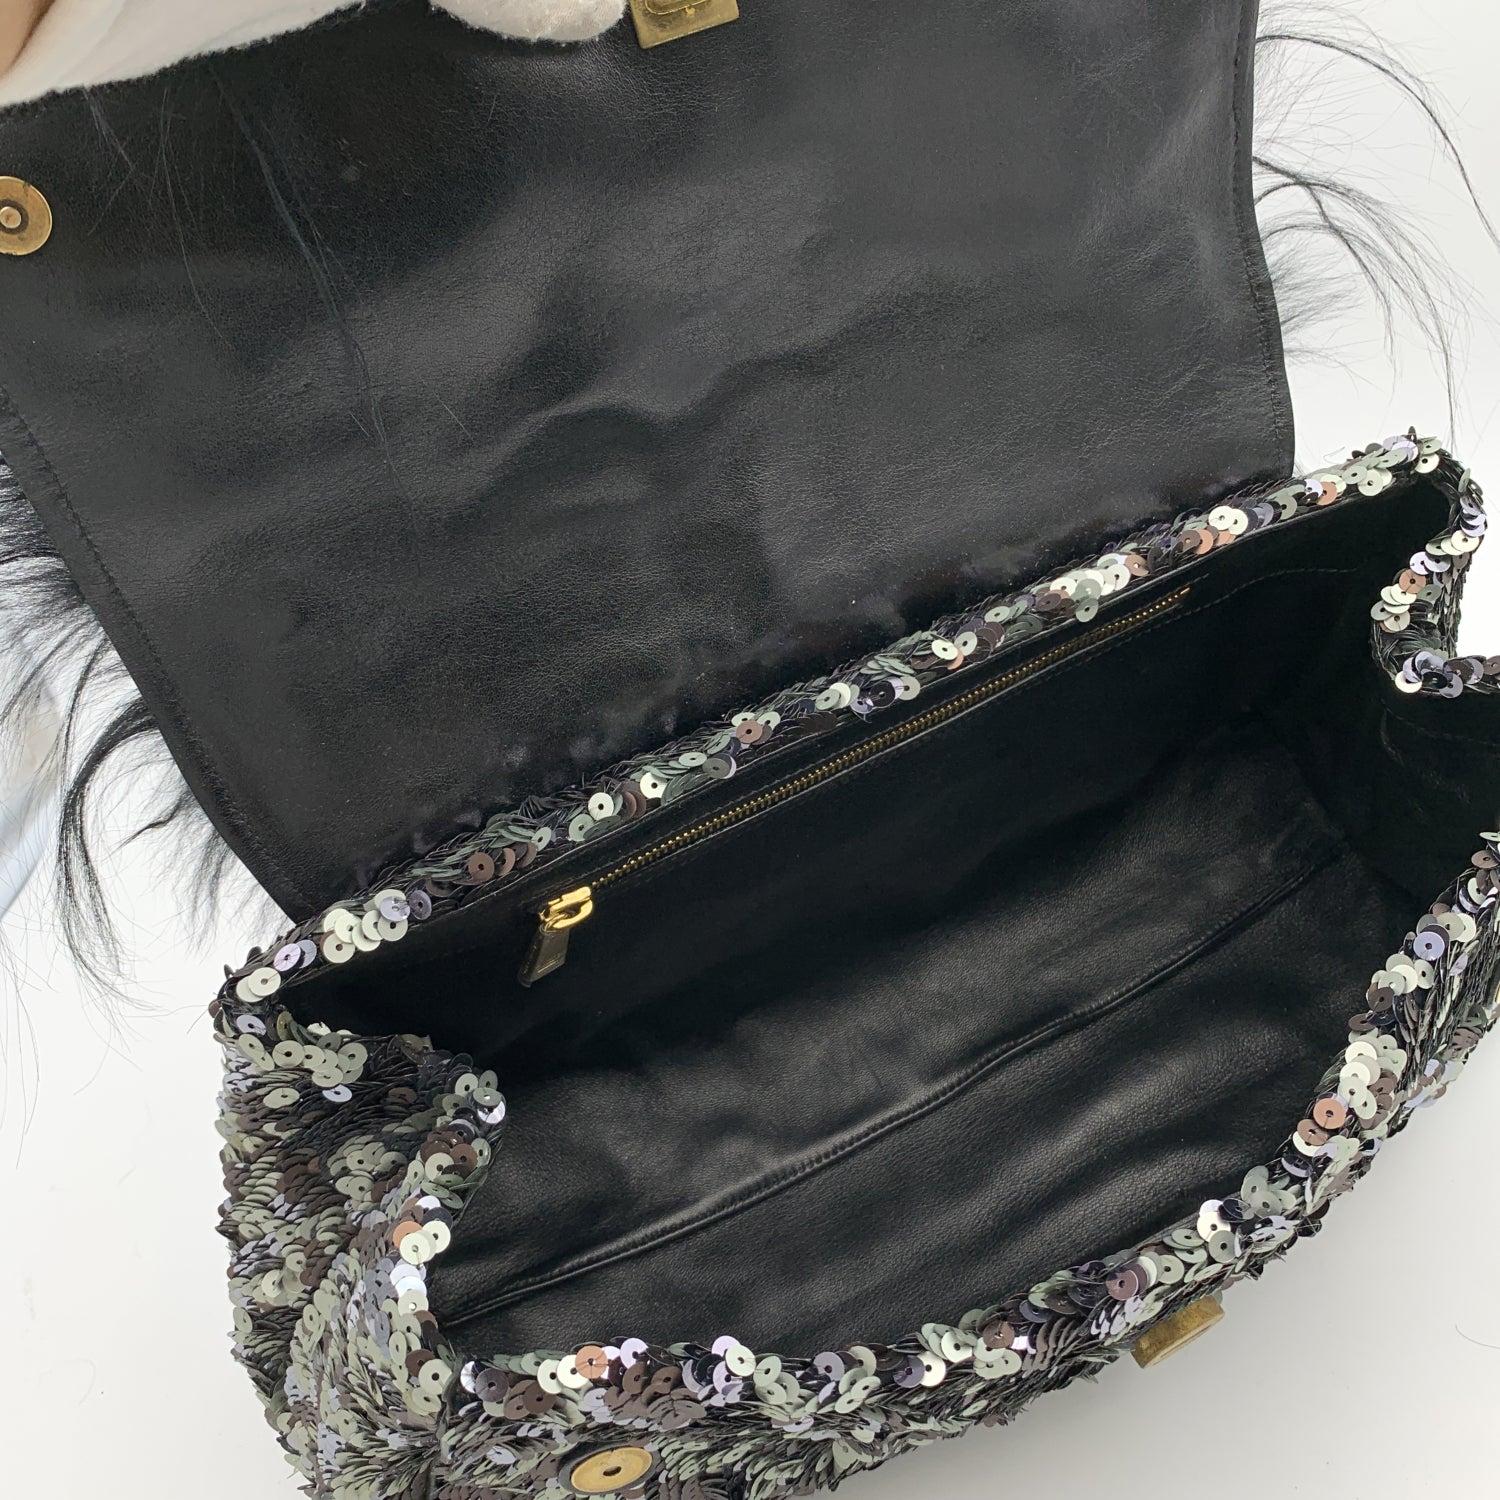 Women's Marc Jacobs Sequined Gilda Large Flap Bag Satchel Handbag